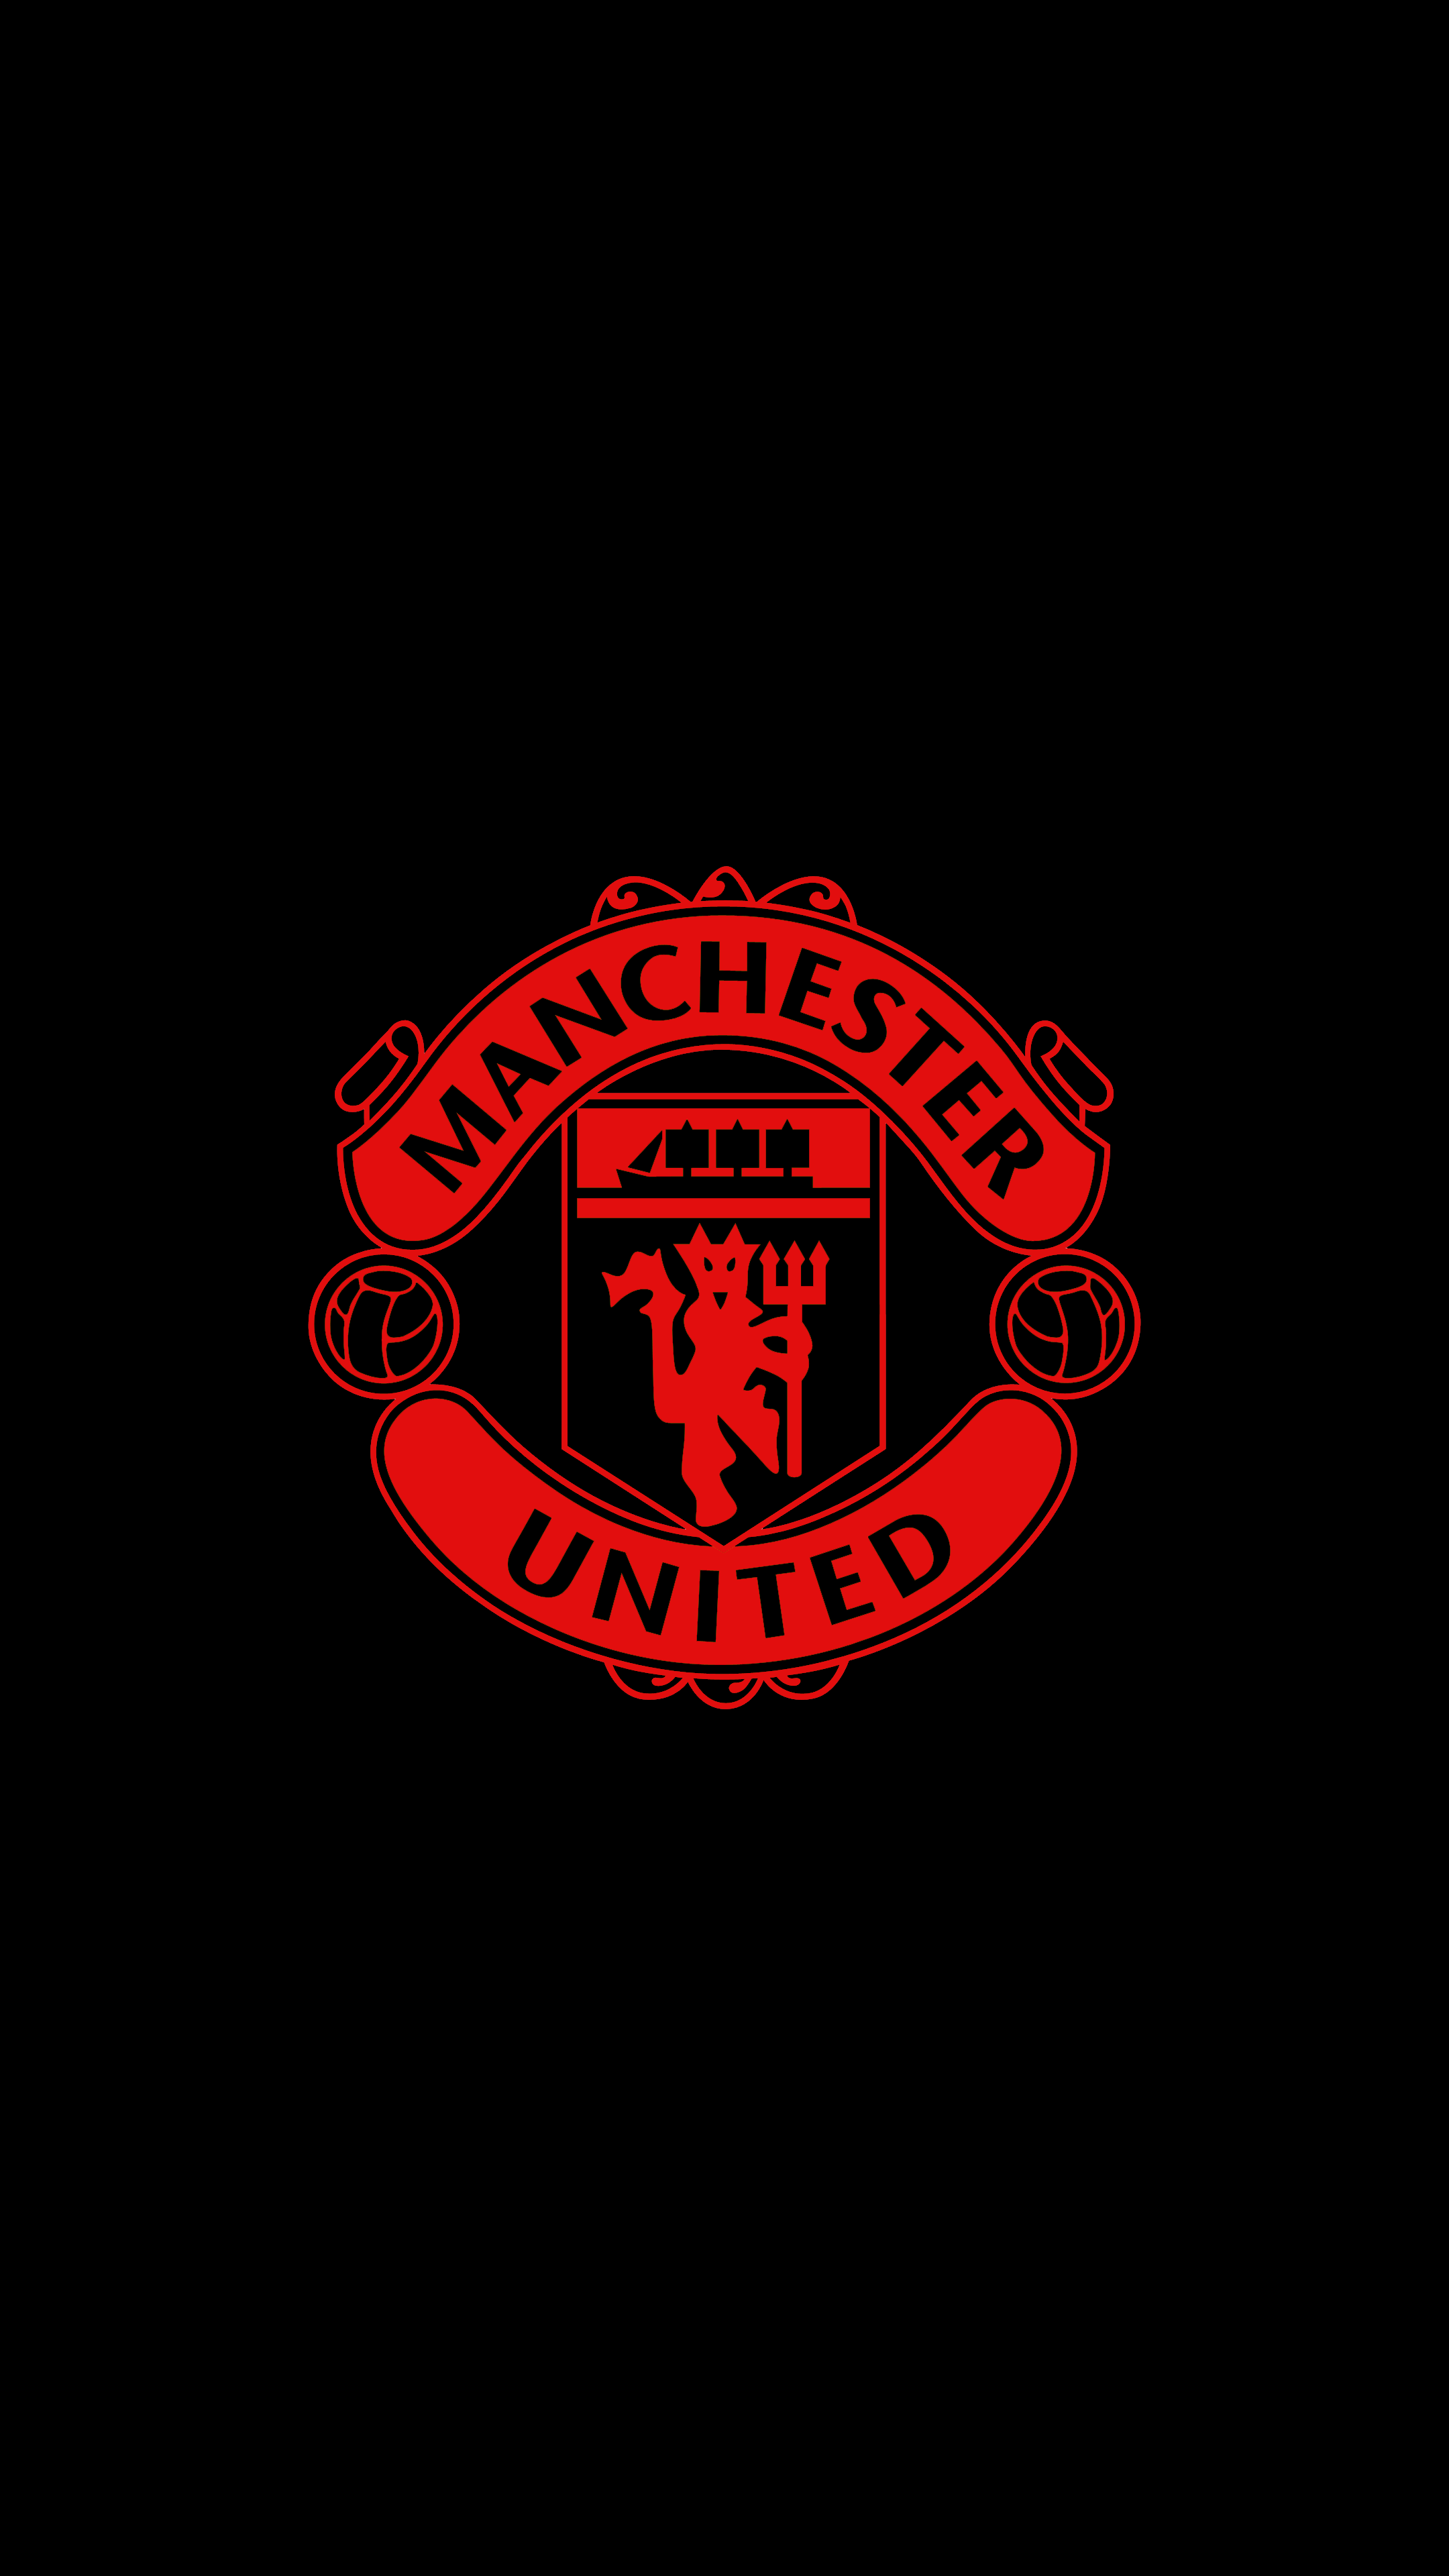 Manchester United 4K Wallpaper. Manchester united wallpaper, Manchester united, Manchester united logo